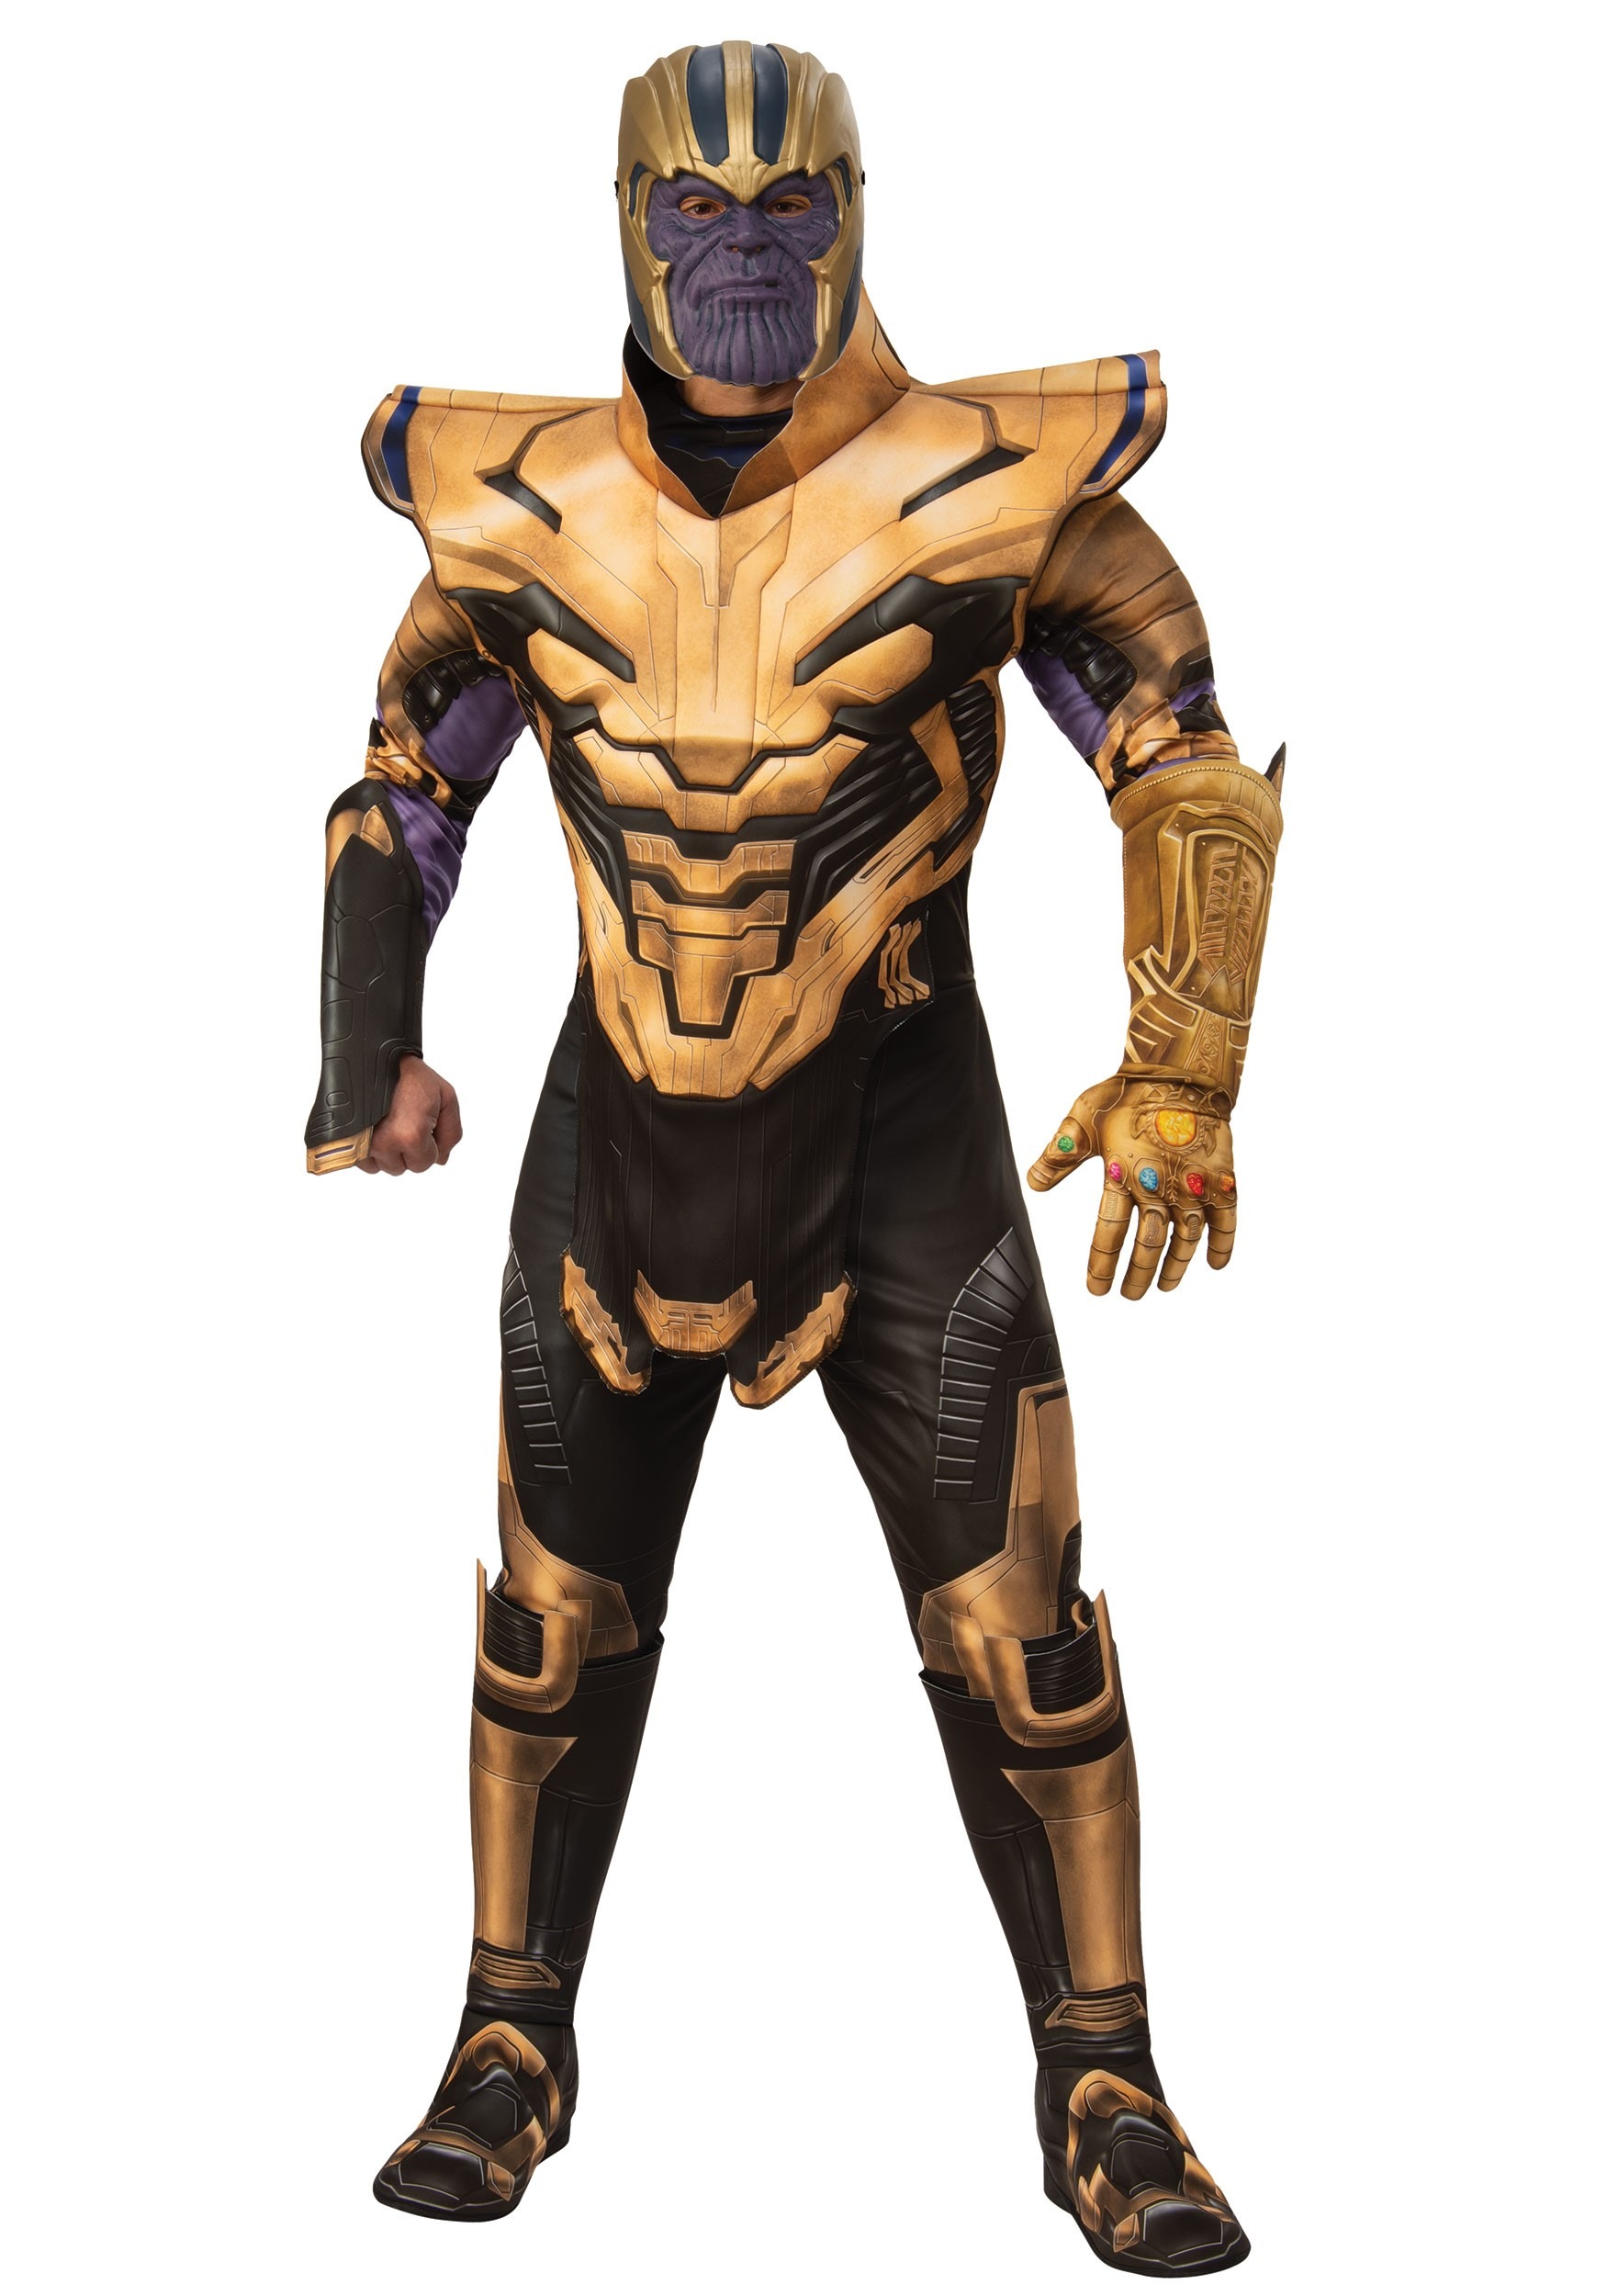 Avengers Endgame Thanos Costume For Men Fandom Shop - avengers endgame movie in roblox playing as thanos